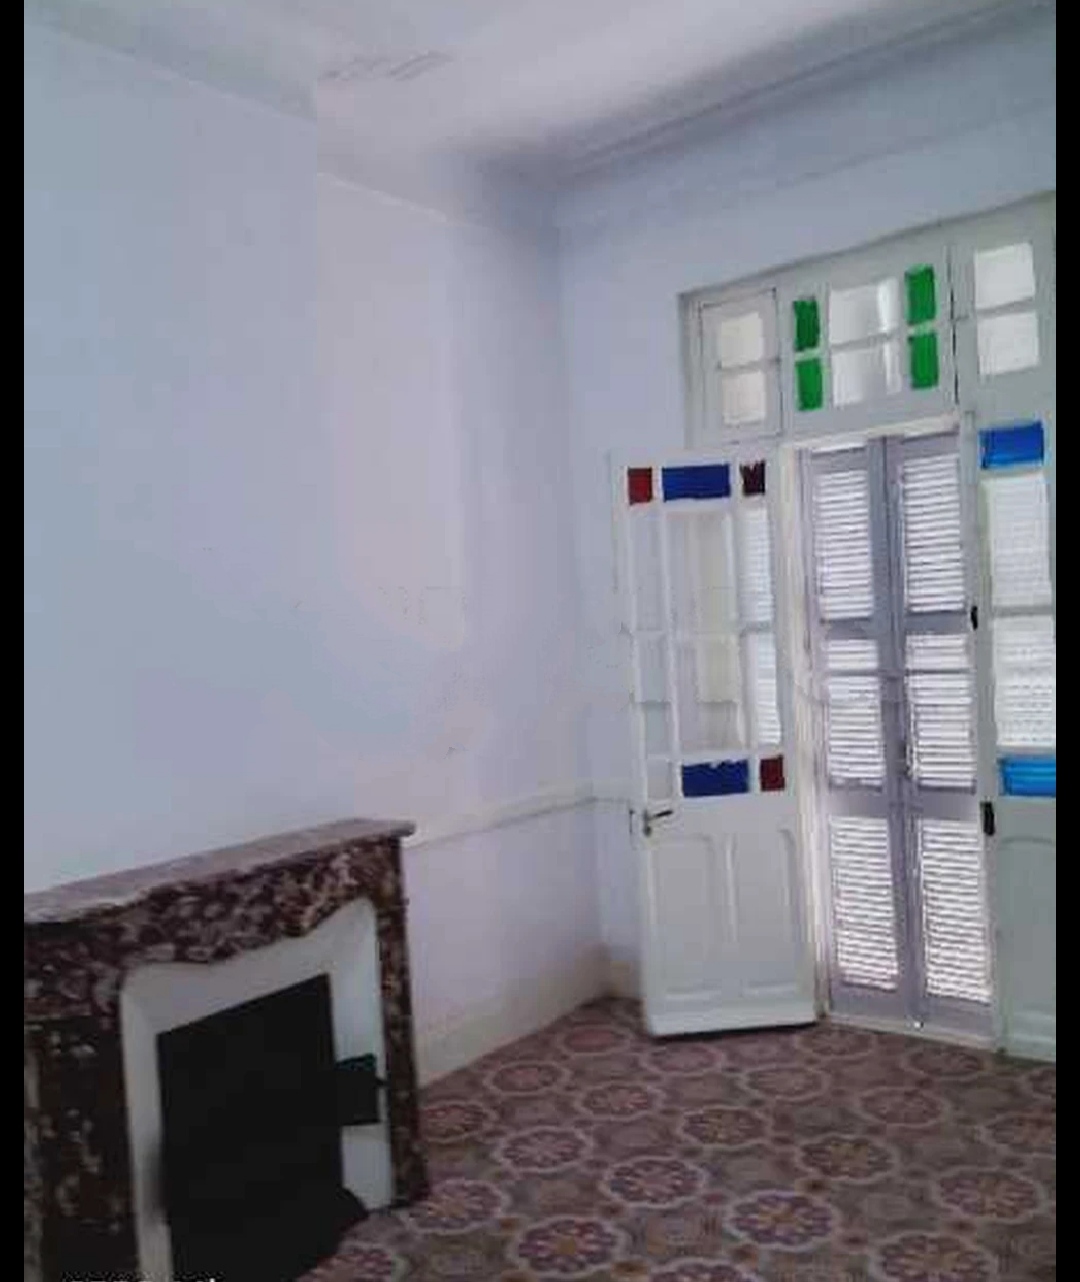 Bab Bhar Habib Thameur Location Appart. 2 pices Appartement usage bureautique